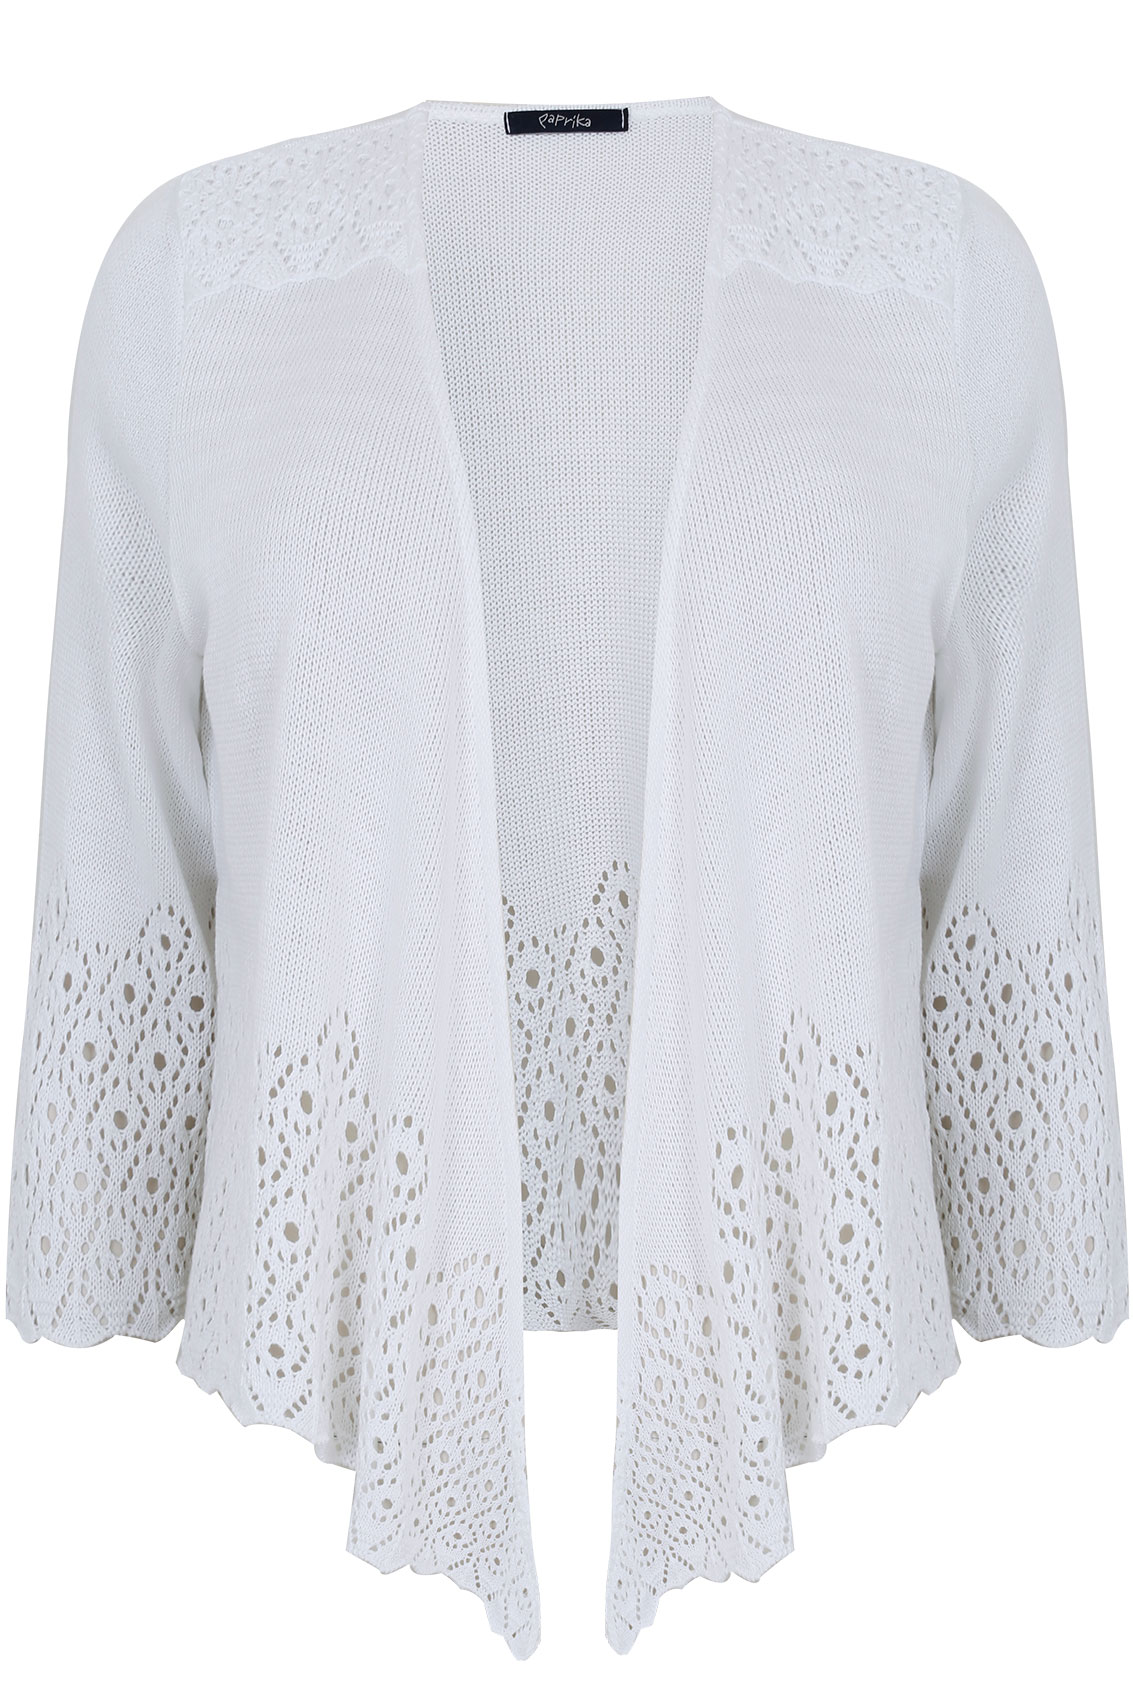 PAPRIKA White Crochet Shrug With 3/4 Length Sleeves Plus Sizes 16,18,20 ...